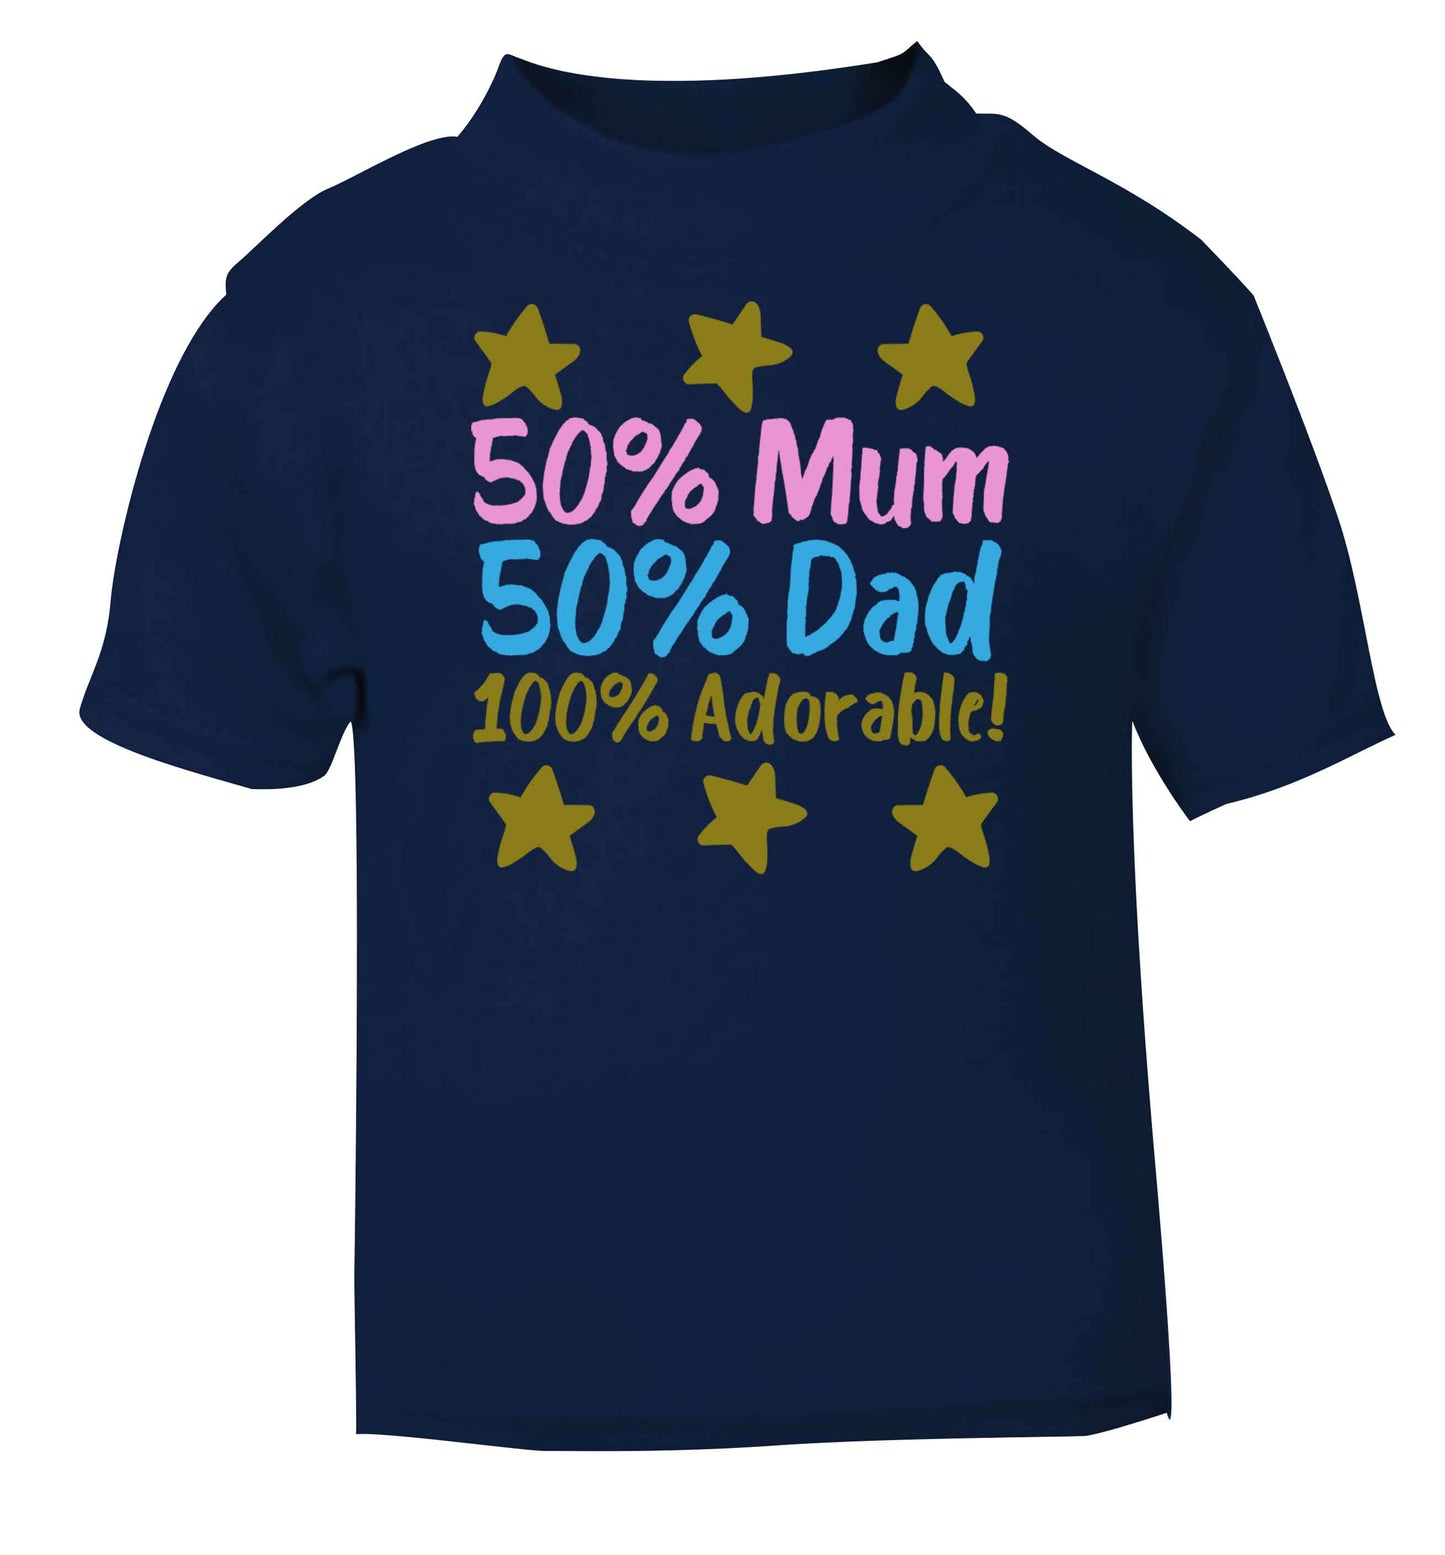 50% mum 50% dad 100% adorable navy baby toddler Tshirt 2 Years